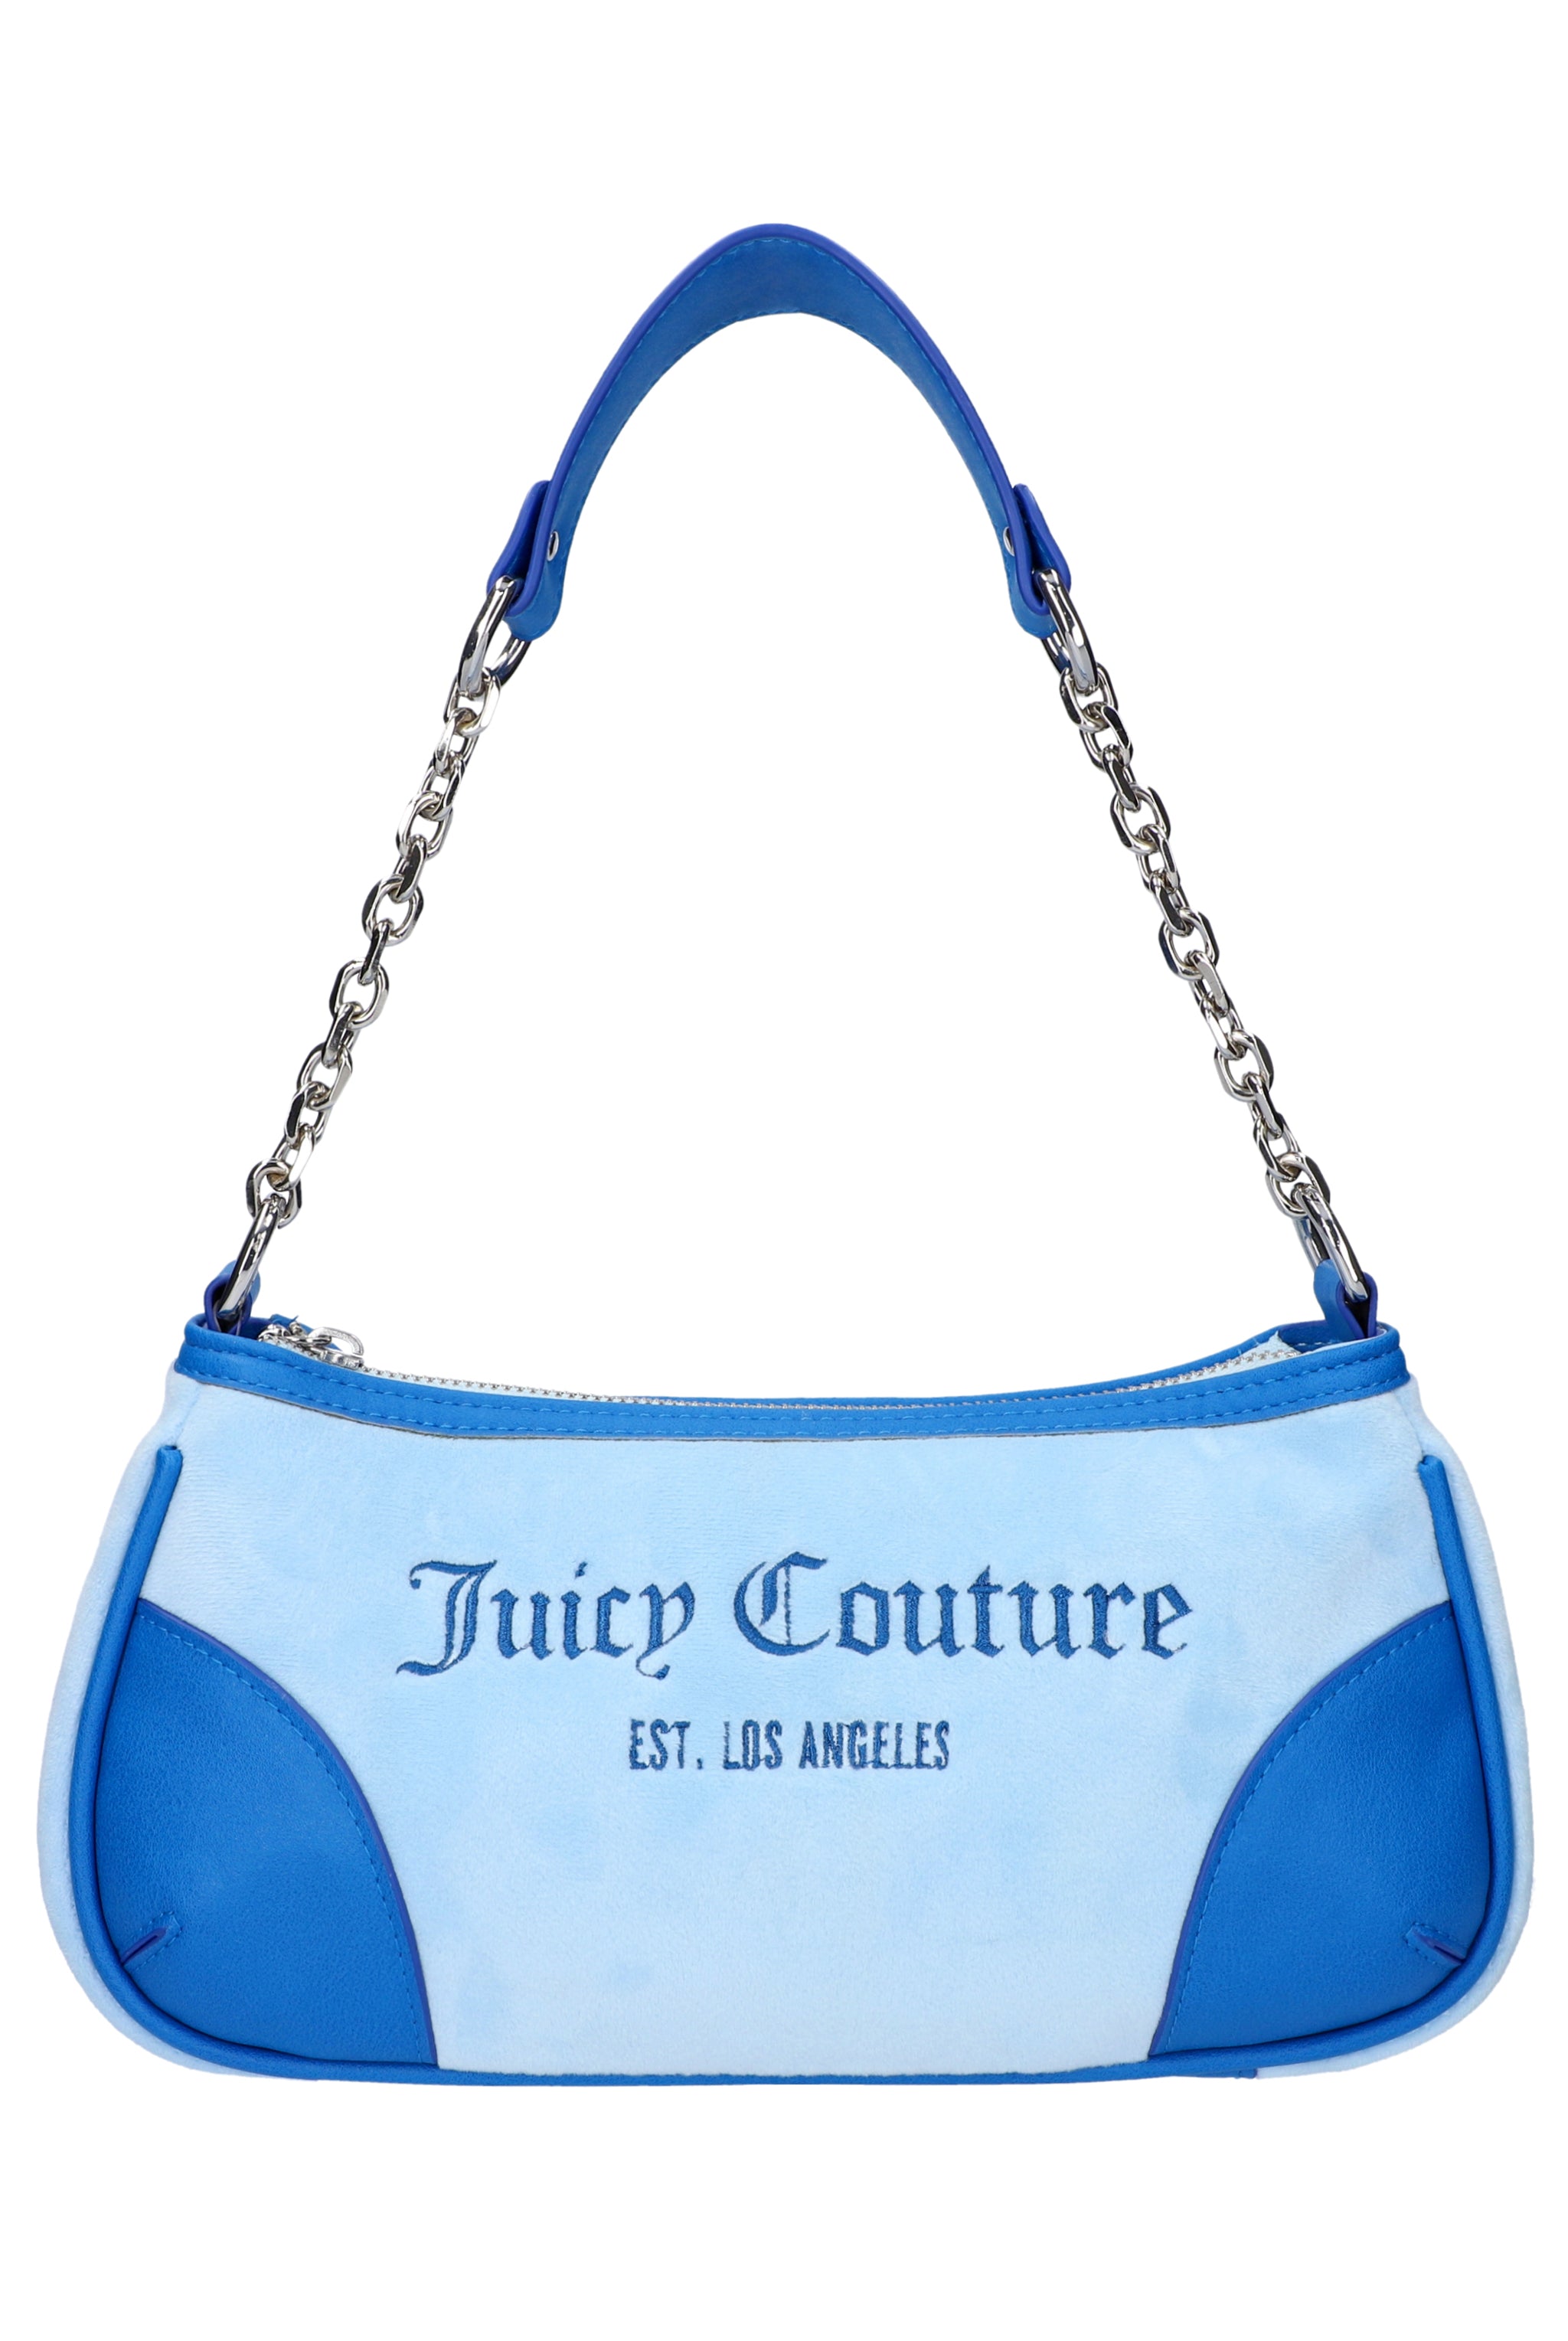 Juicy Couture Double Handle Satchels | Mercari